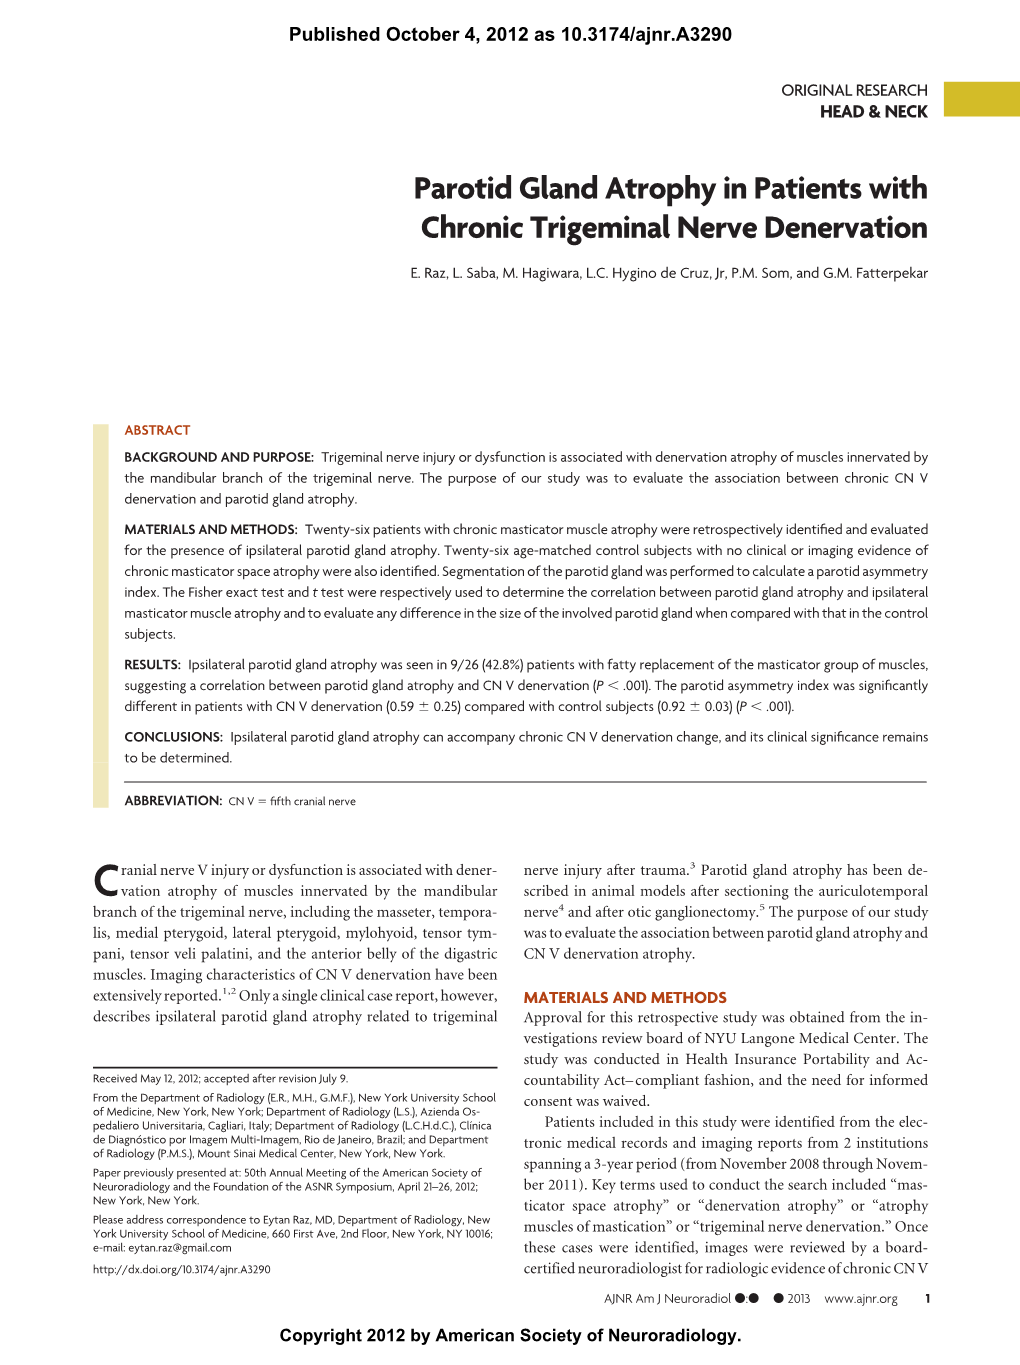 Parotid Gland Atrophy in Patients with Chronic Trigeminal Nerve Denervation